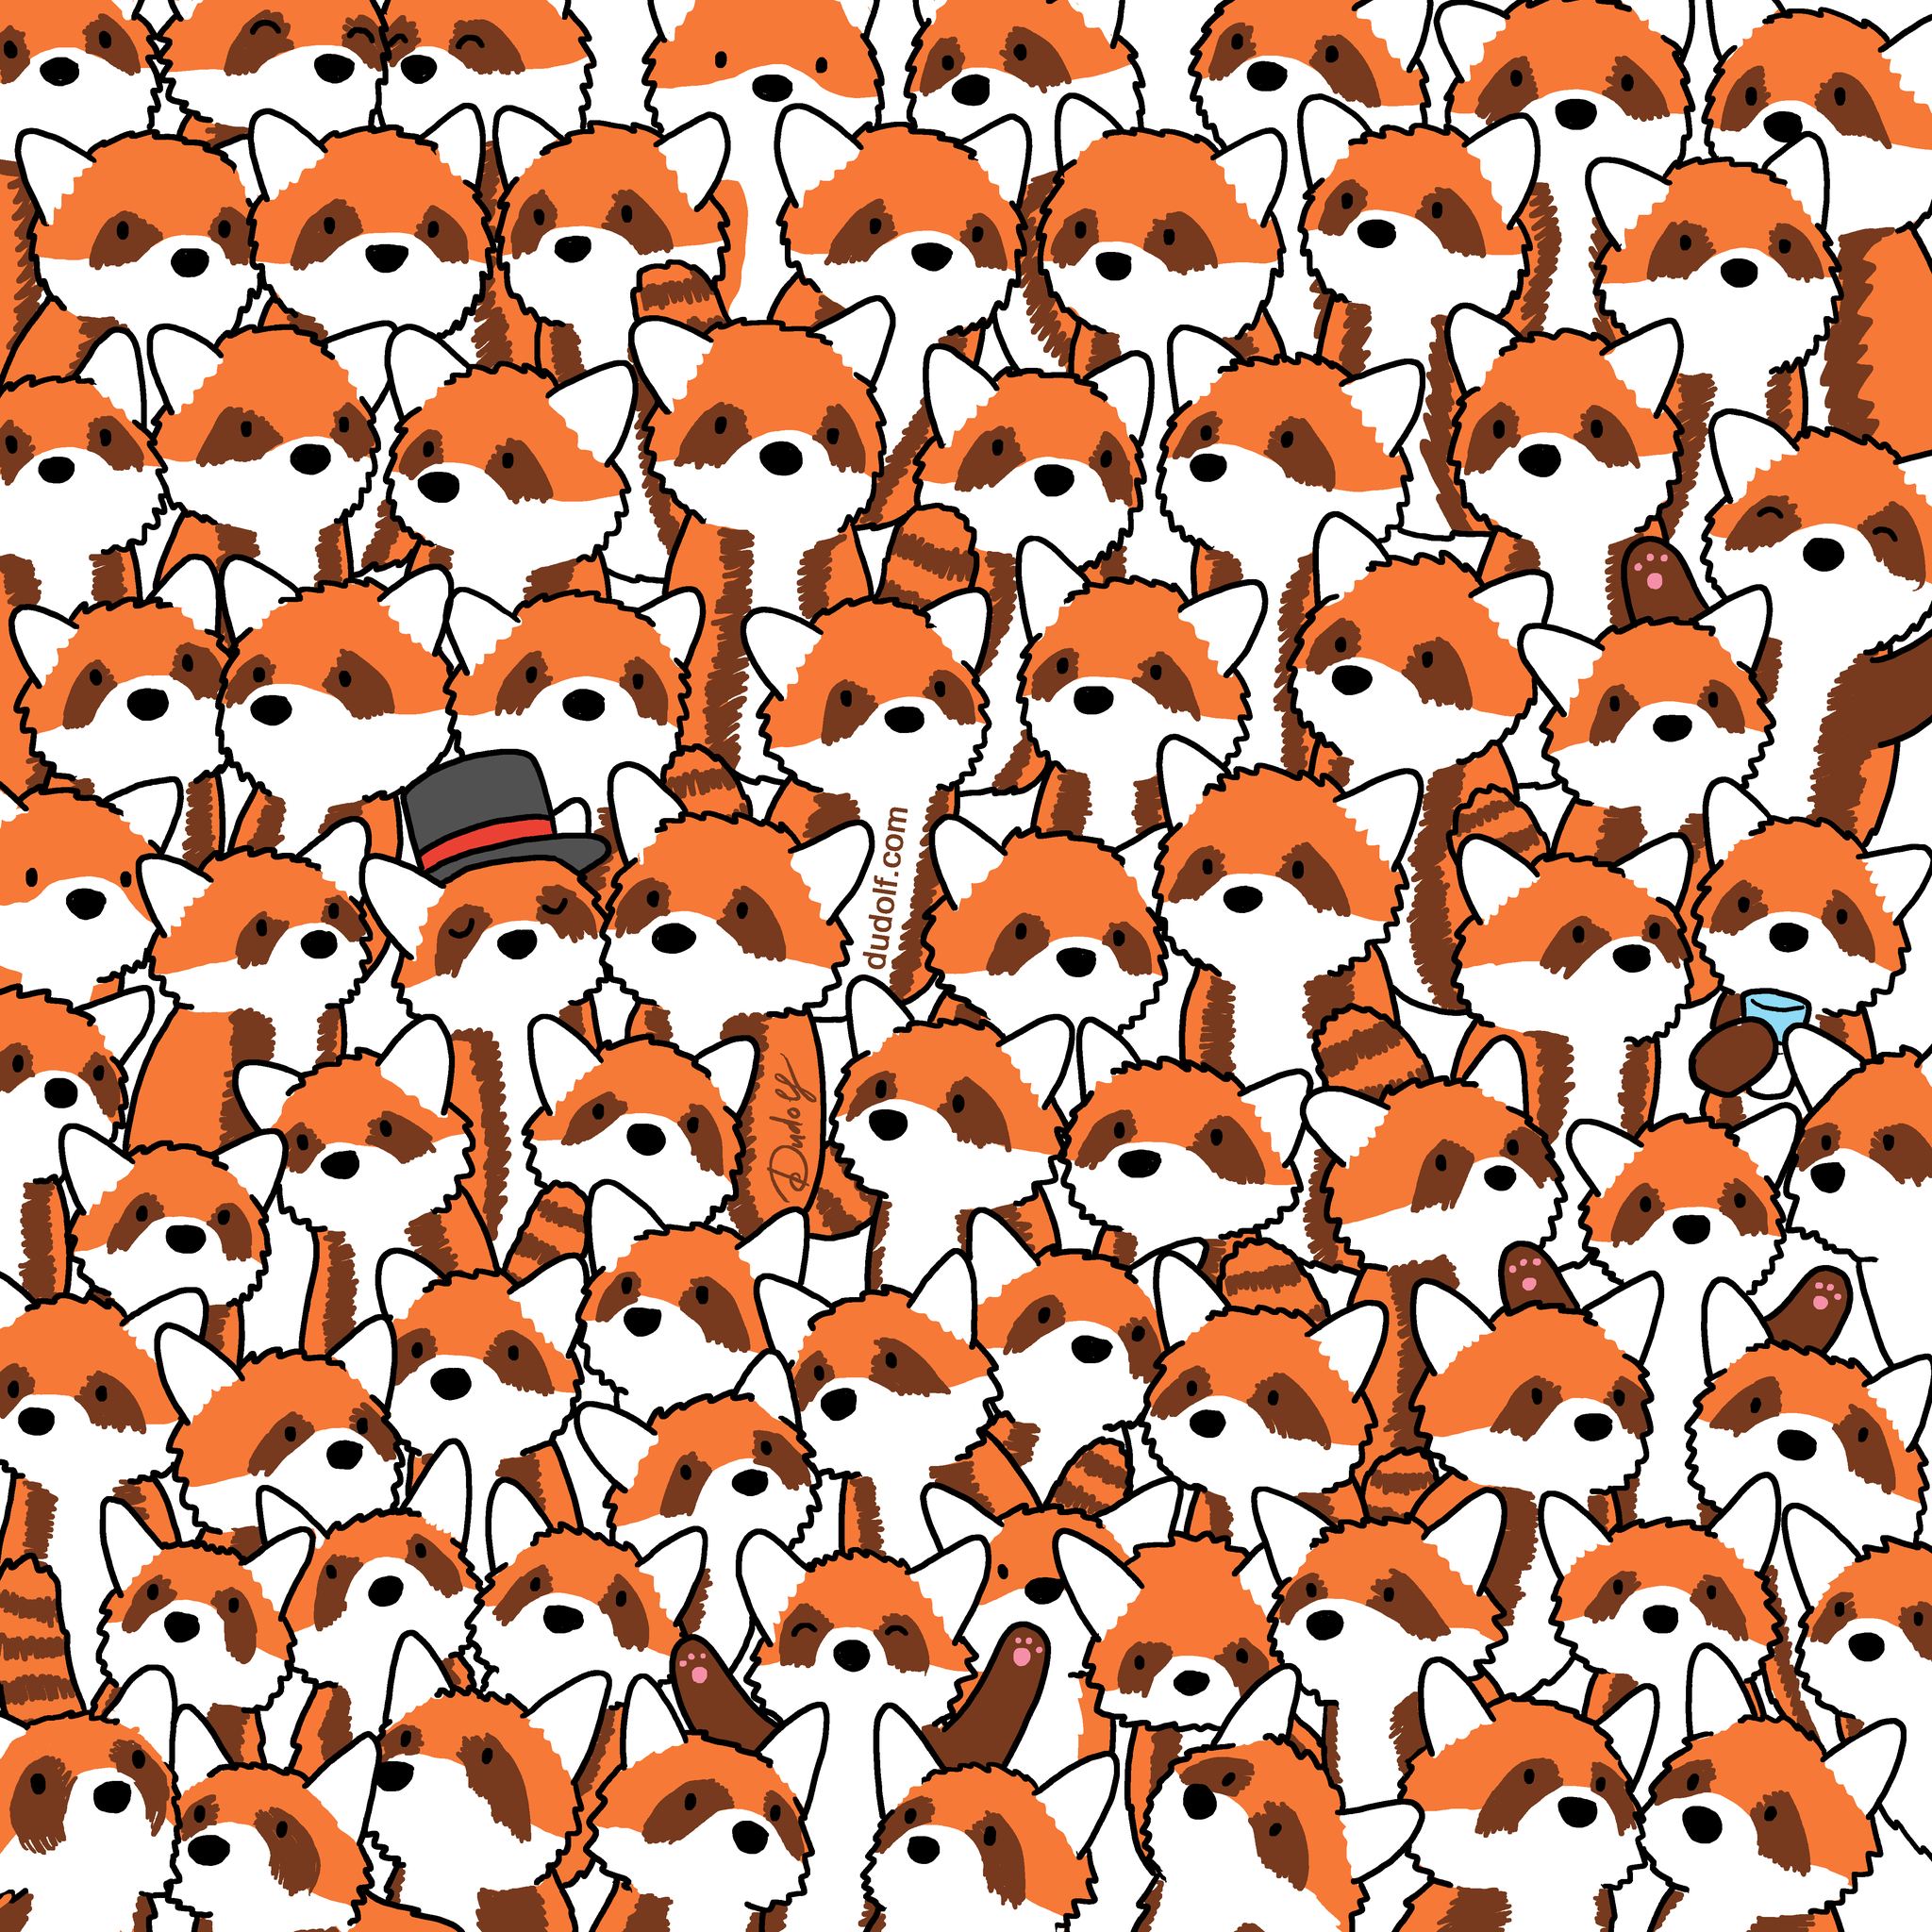 Optical Illusion Spot 3 Hidden Foxes Among The Red Pandas